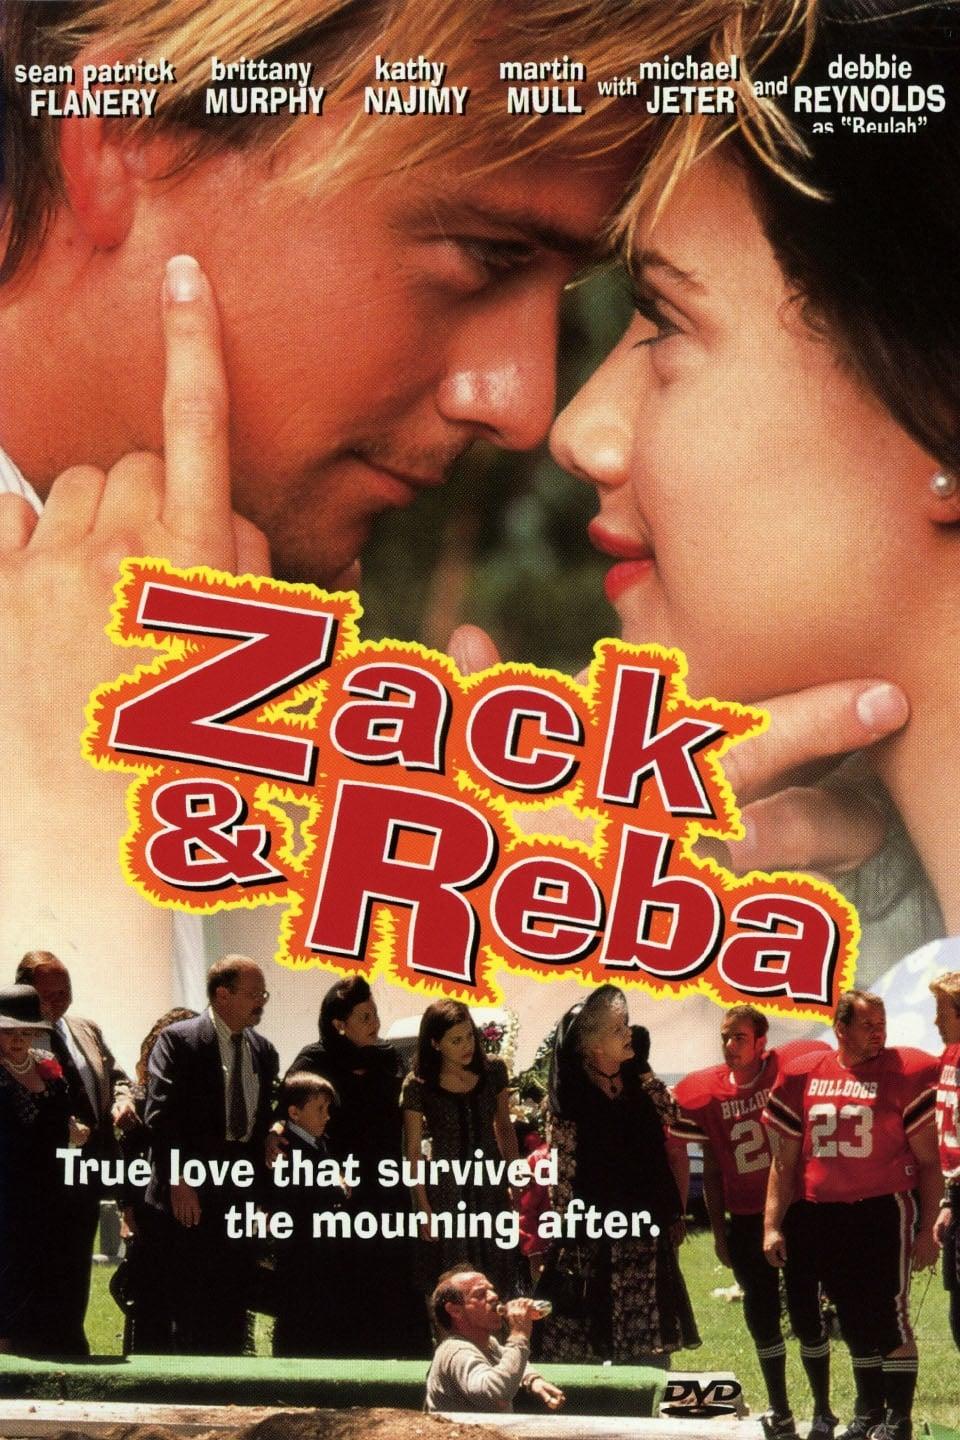 Zack and Reba poster